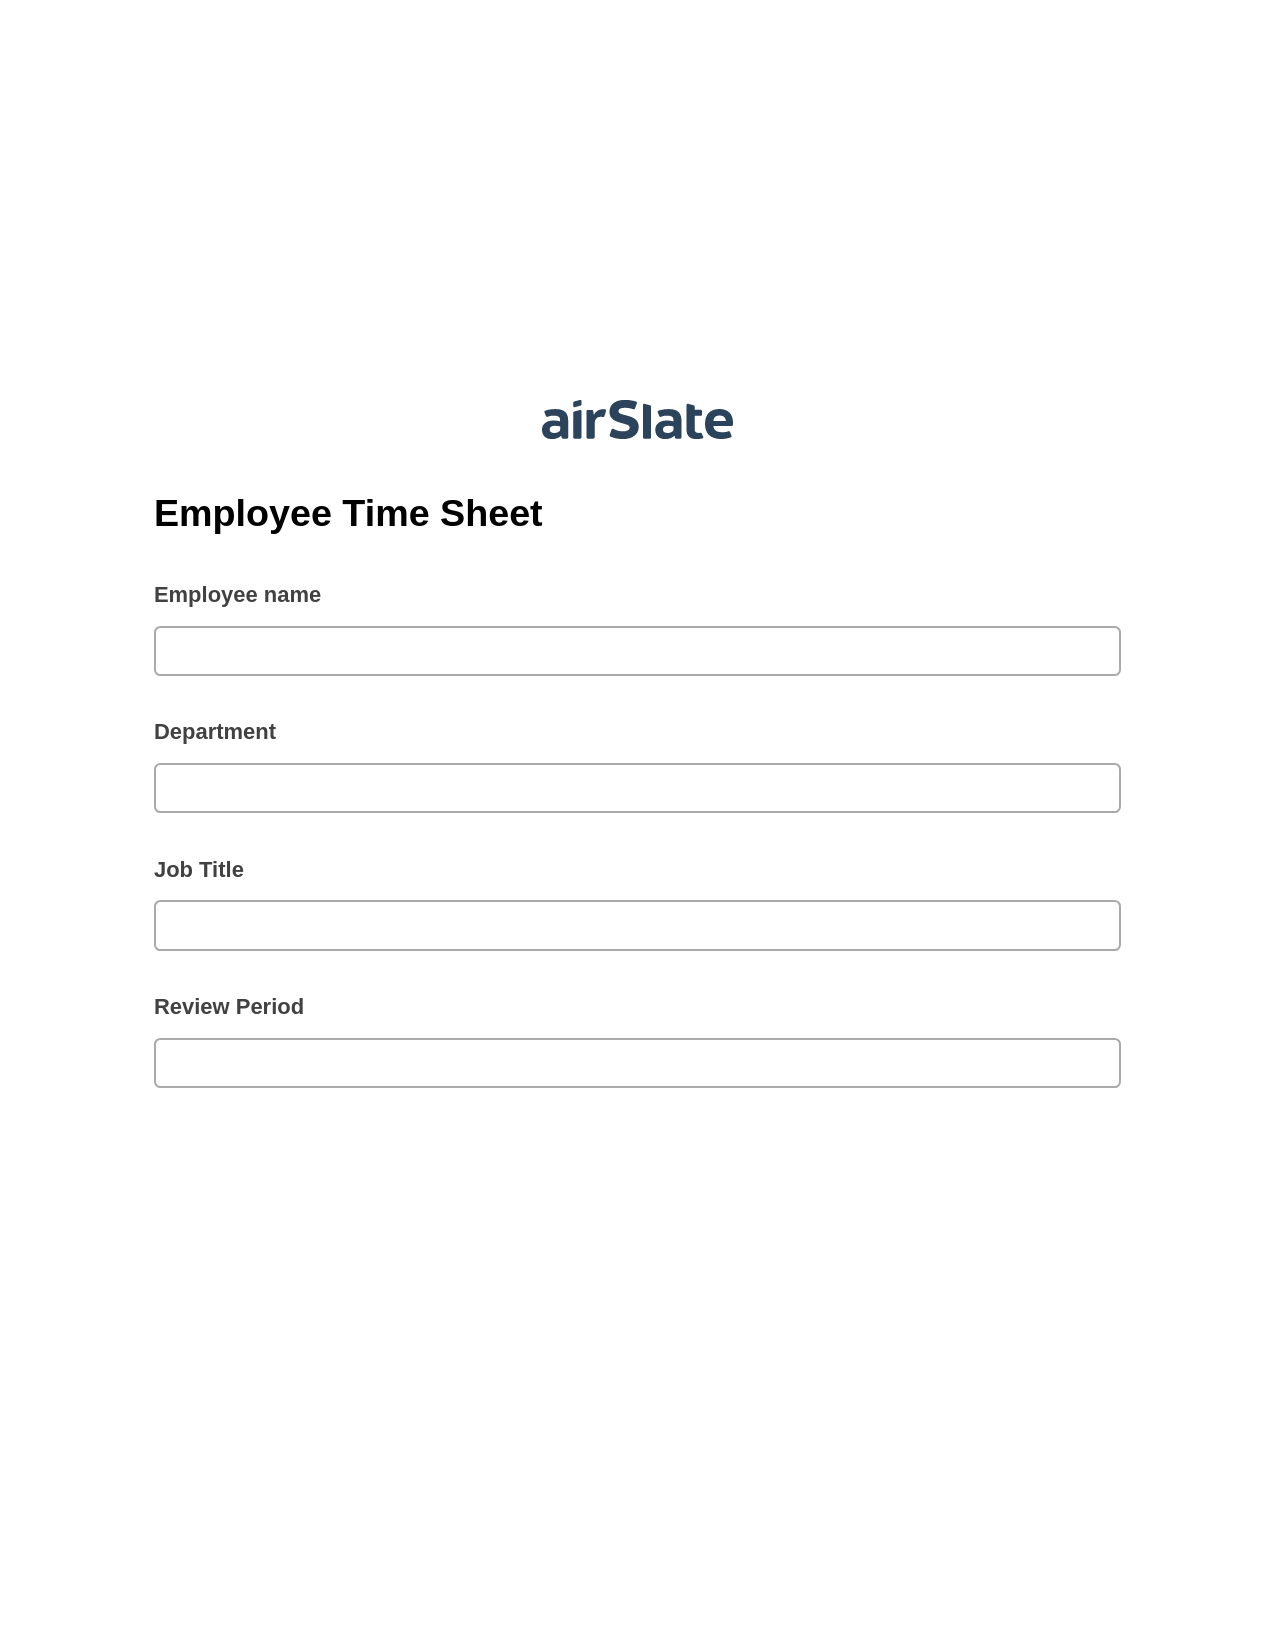 Employee Time Sheet Pre-fill Dropdowns from Google Sheet Bot, Update Audit Trail Bot, Export to Smartsheet